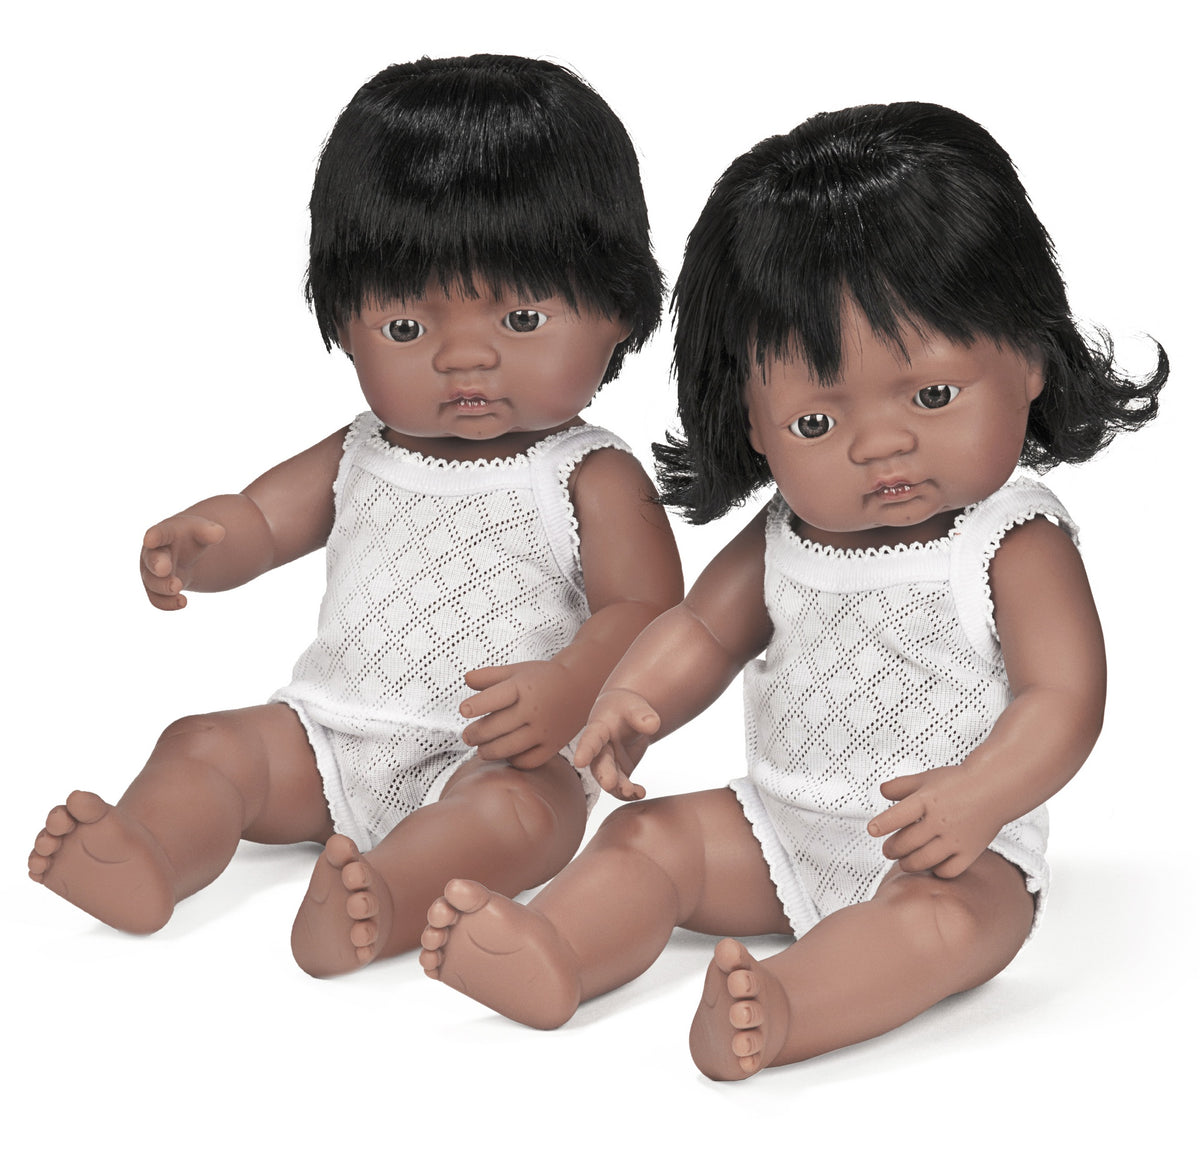 Miniland Doll 38cm Hispanic Boy